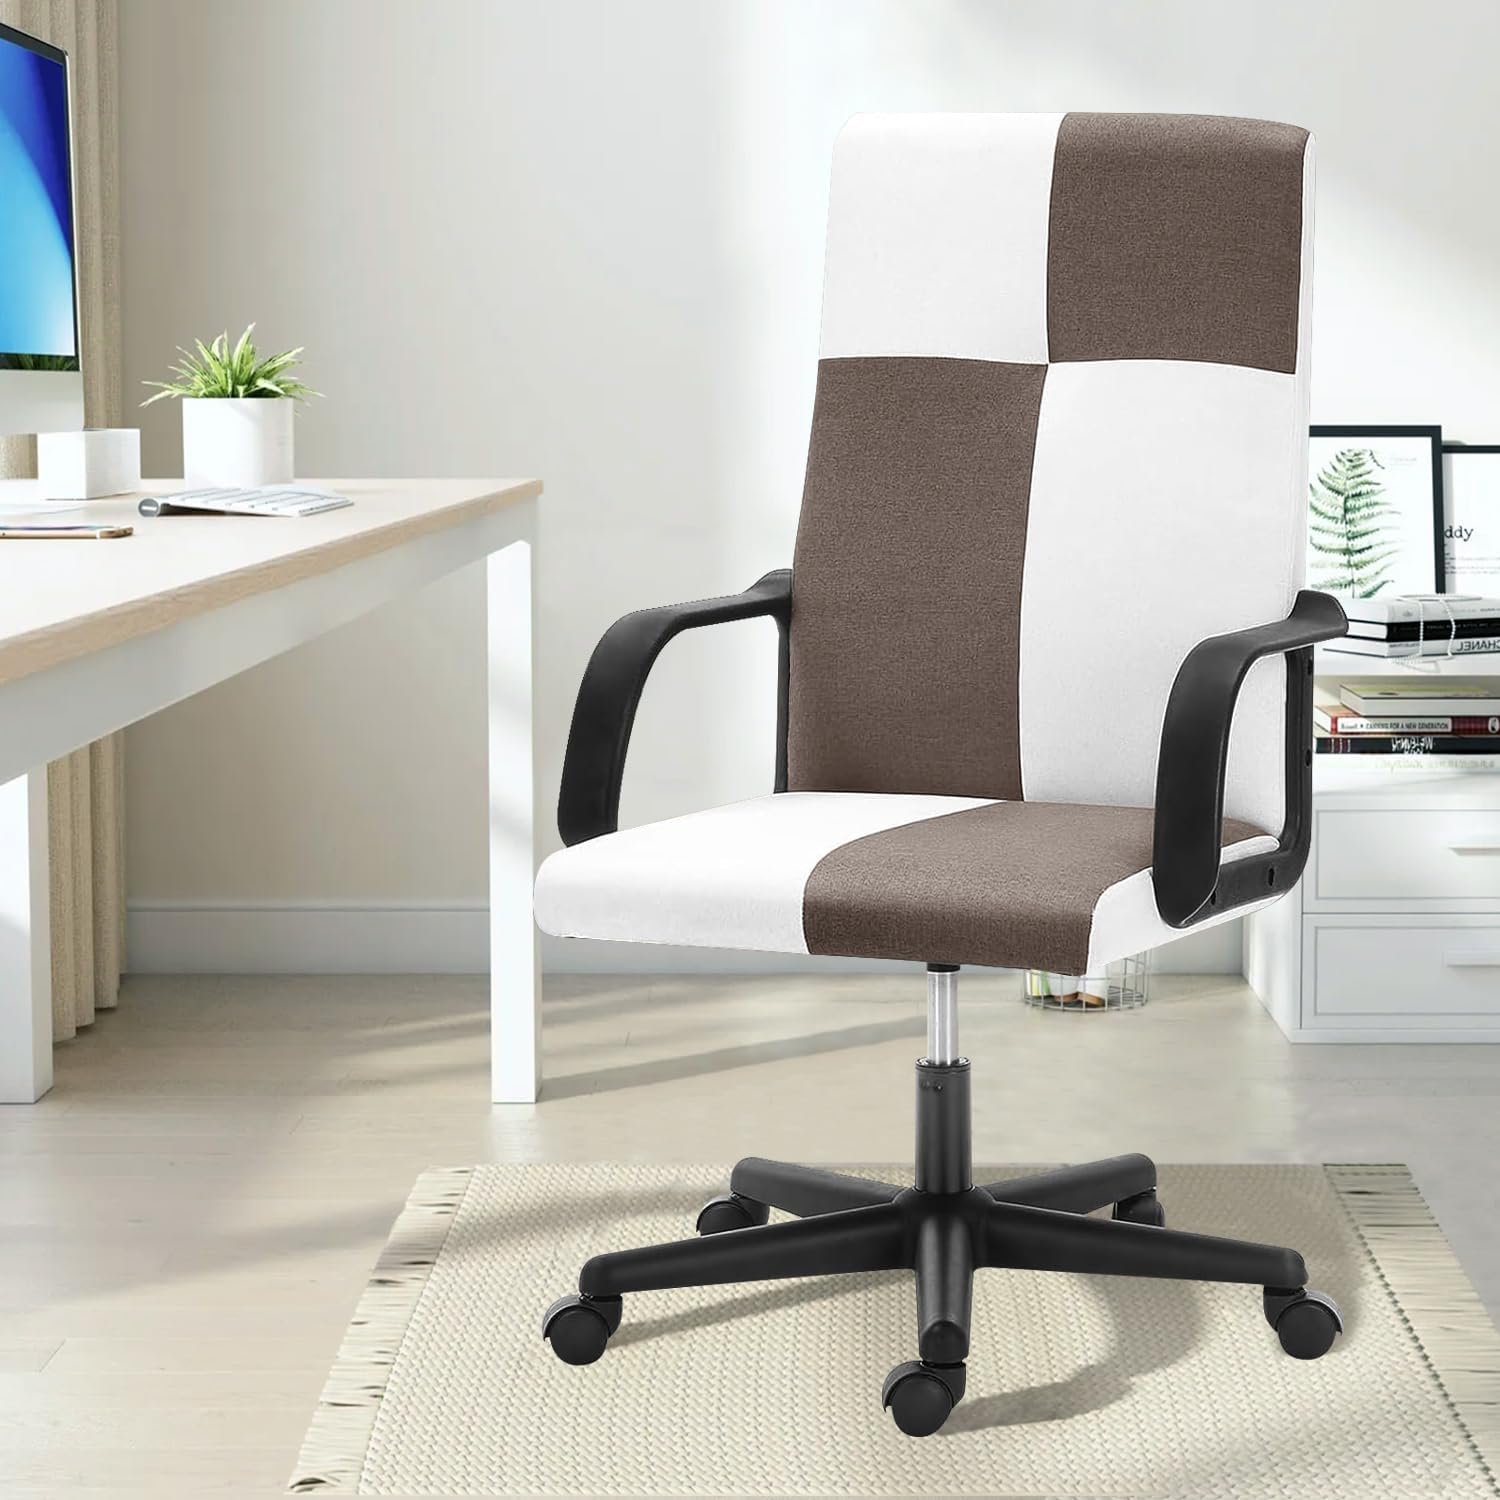 Khaki/White Office Chair Review